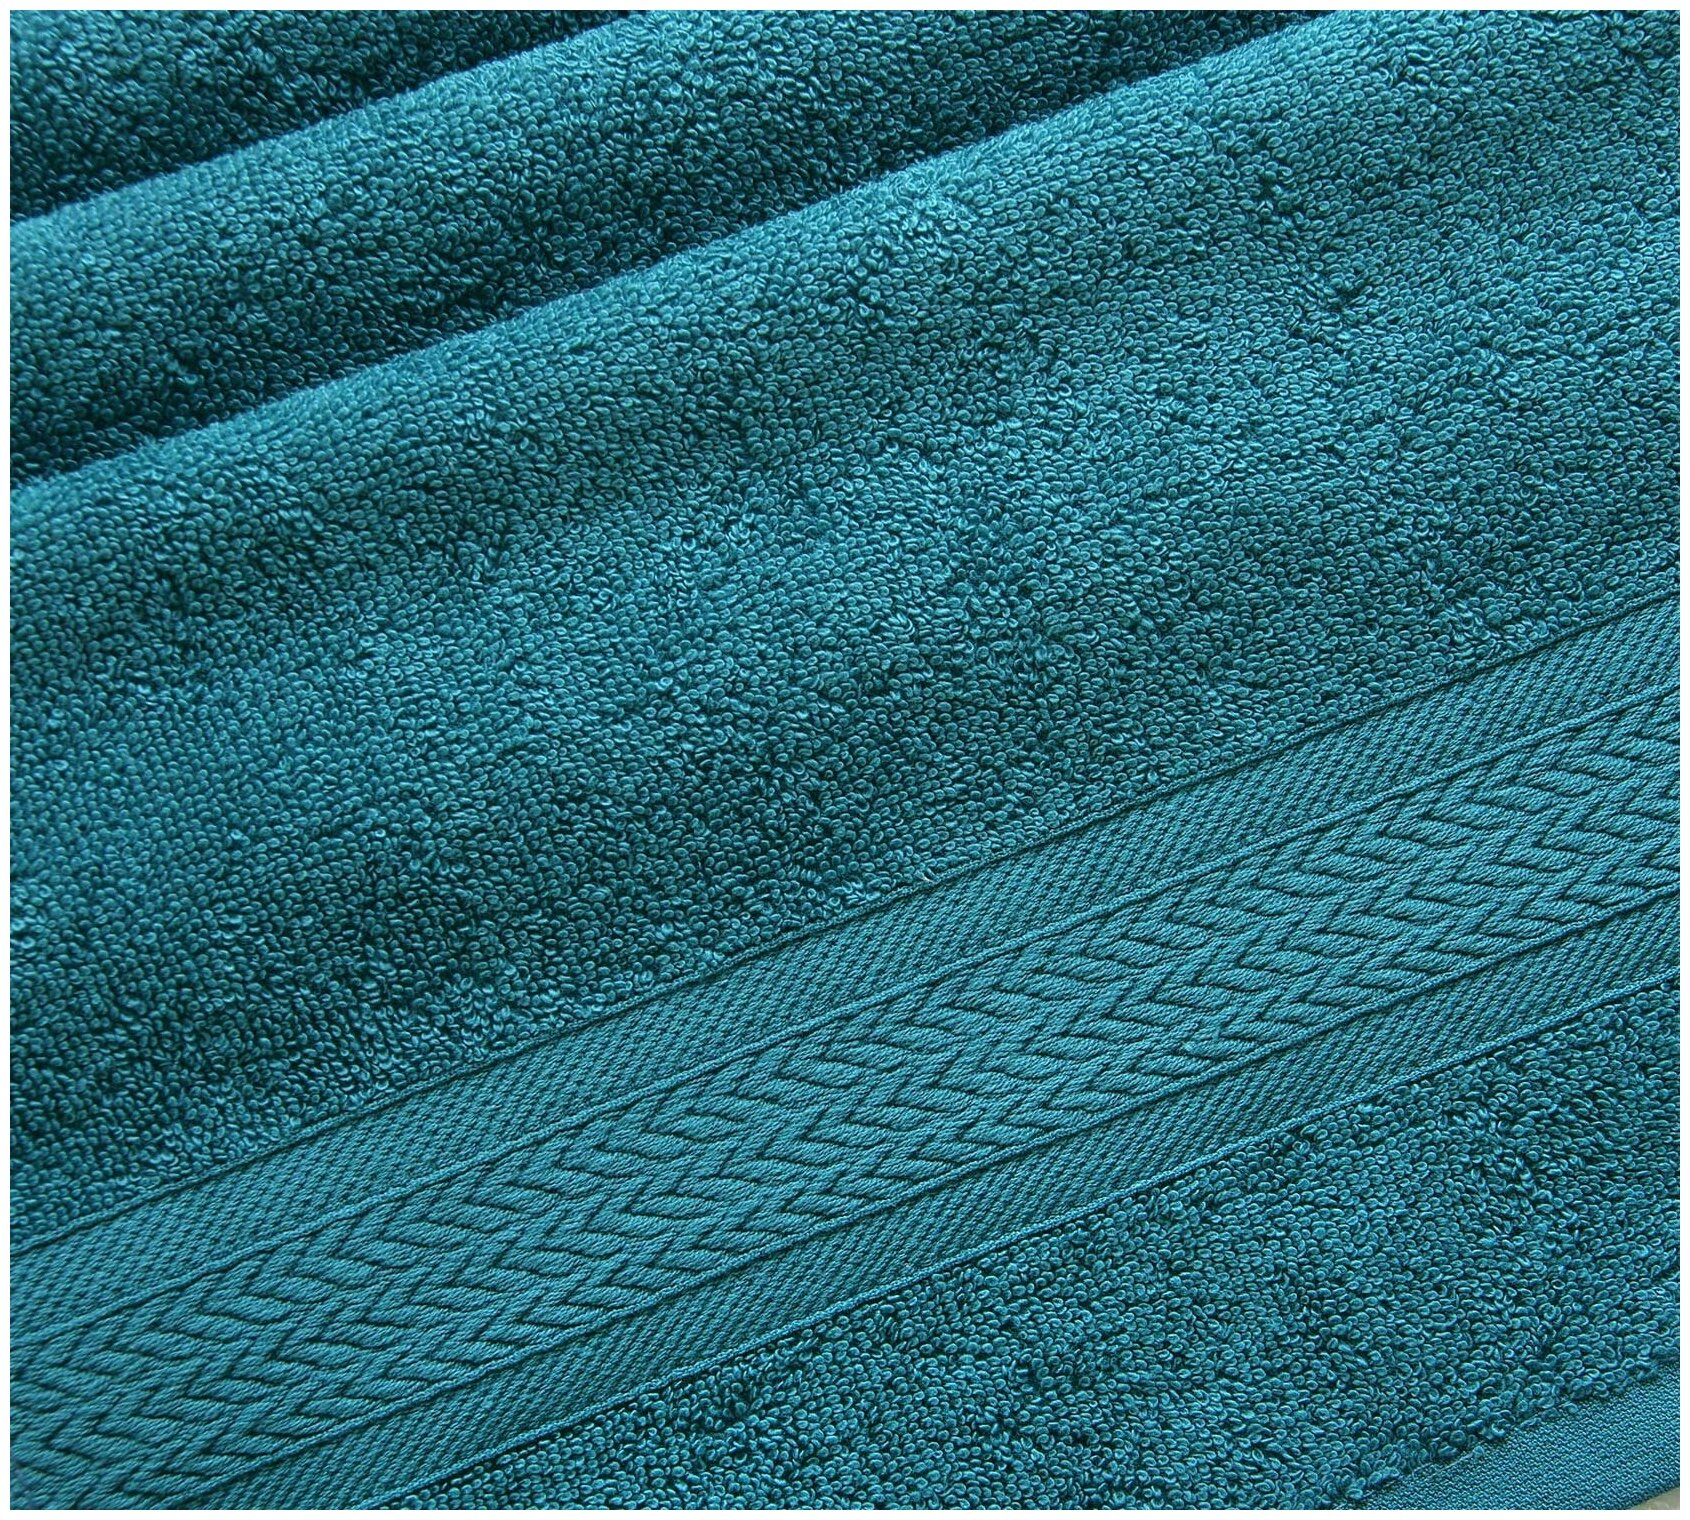 Текс-Дизайн Махровое полотенце Утро морская волна (40х70)